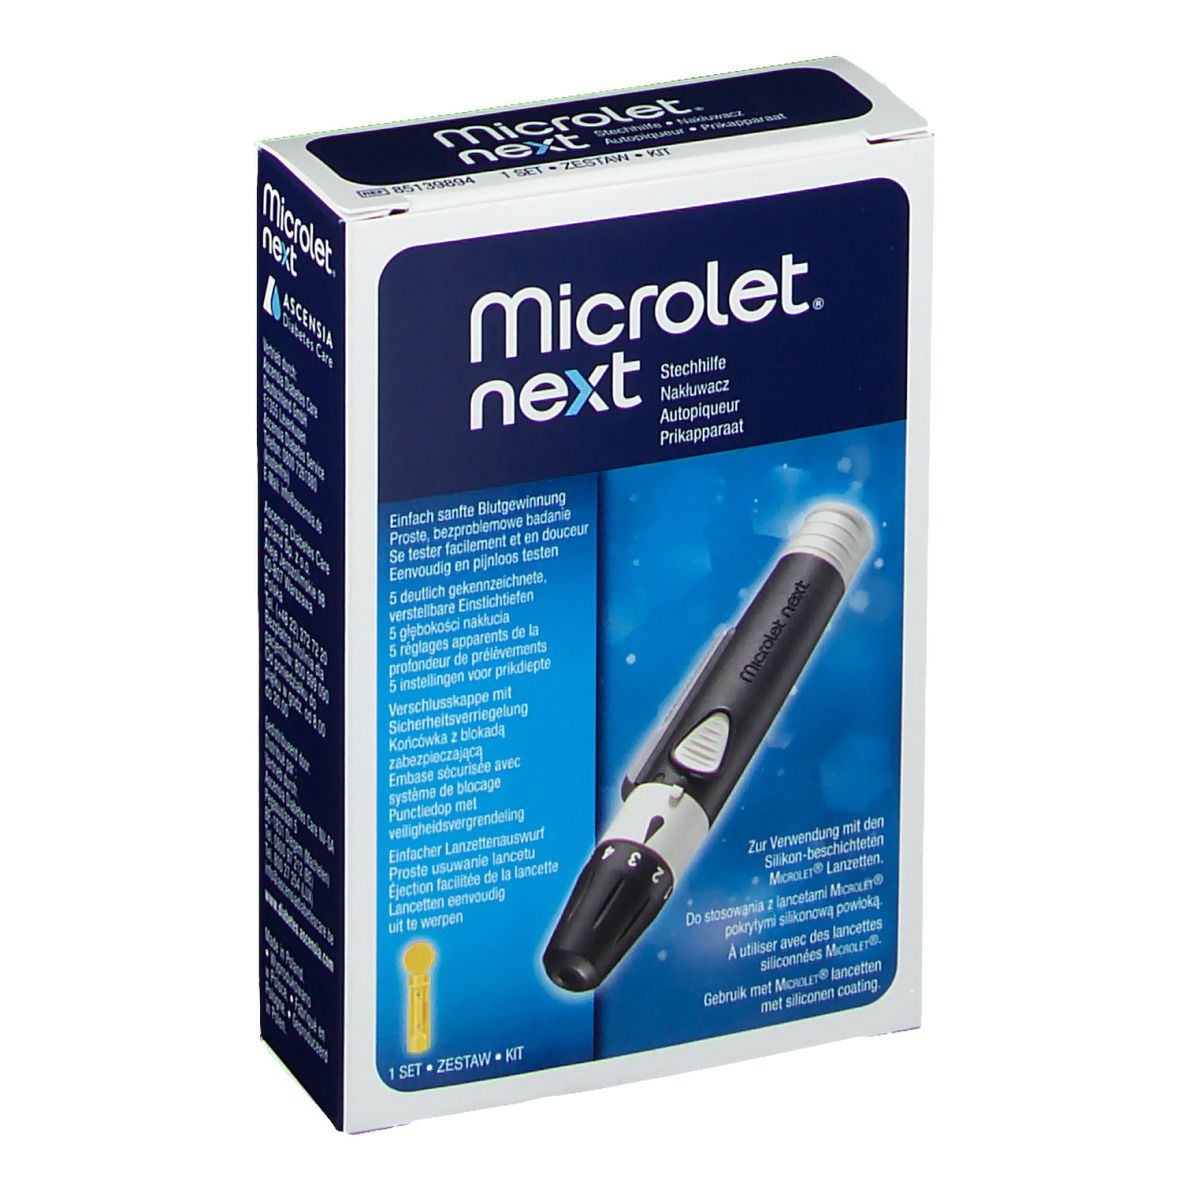 Microlet® next Stechhilfe